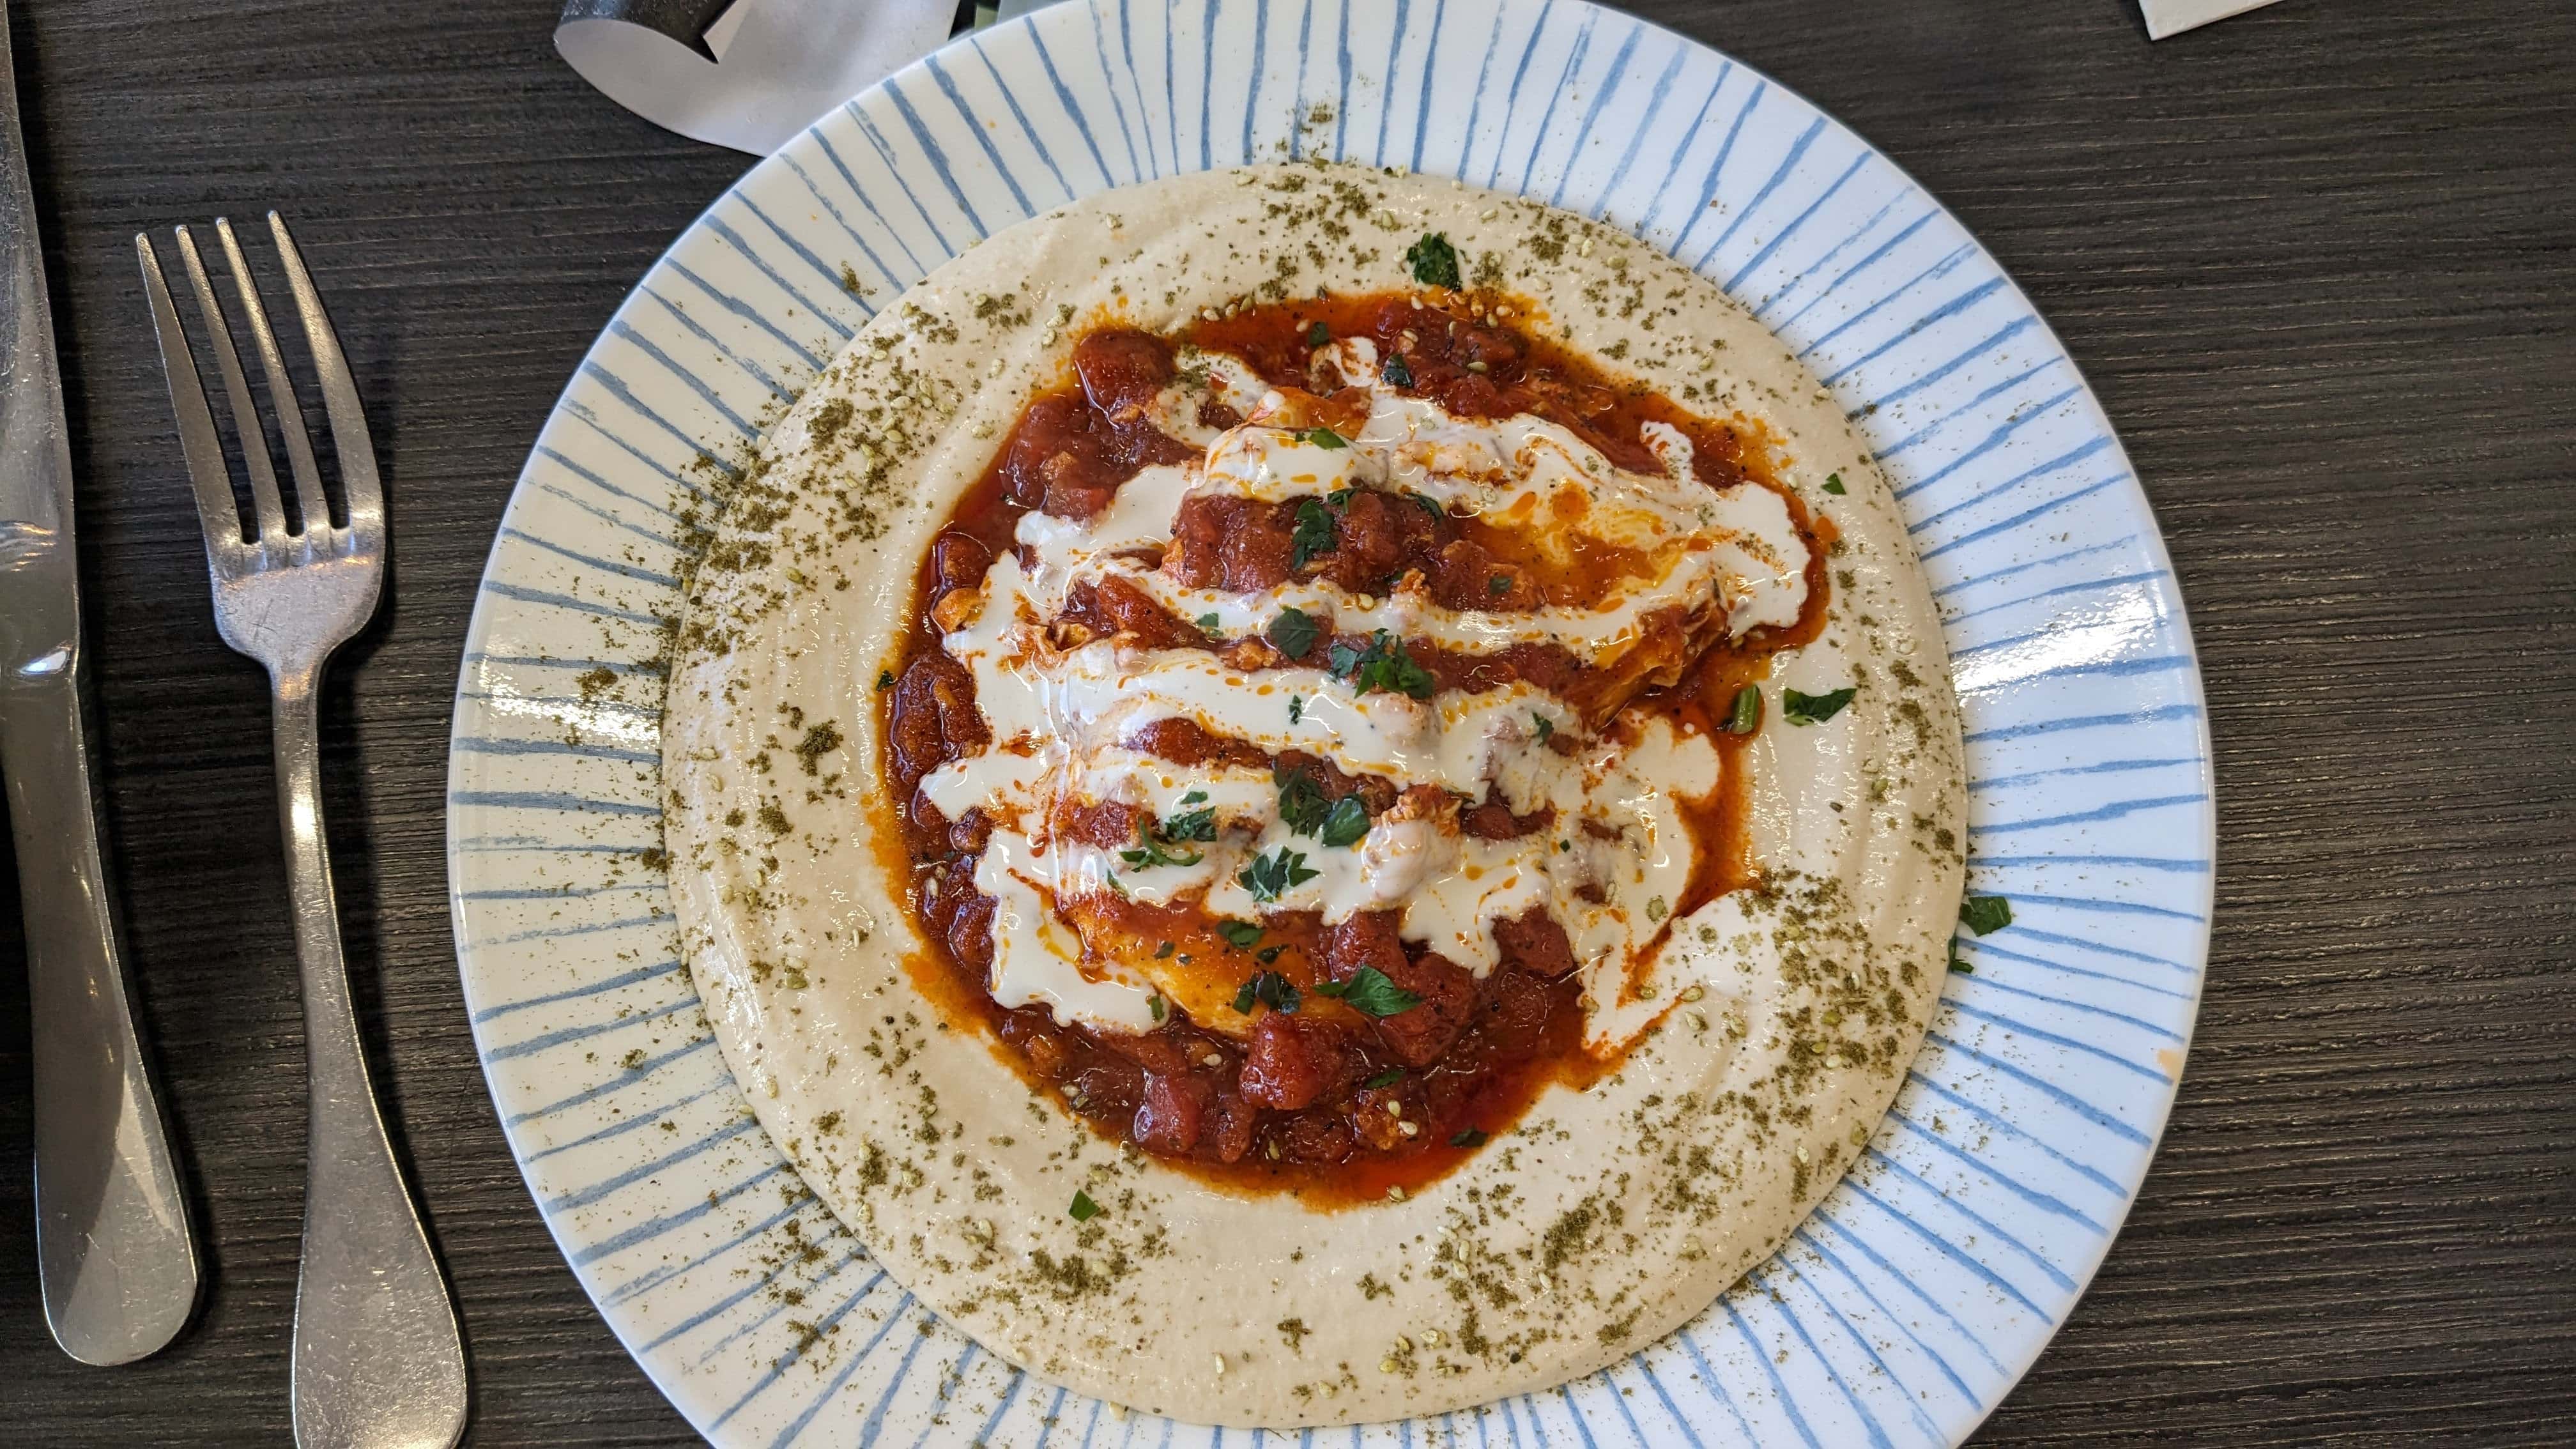 Tel Aviv Fish Grill - Tarzana, CA, US, best brunch near me